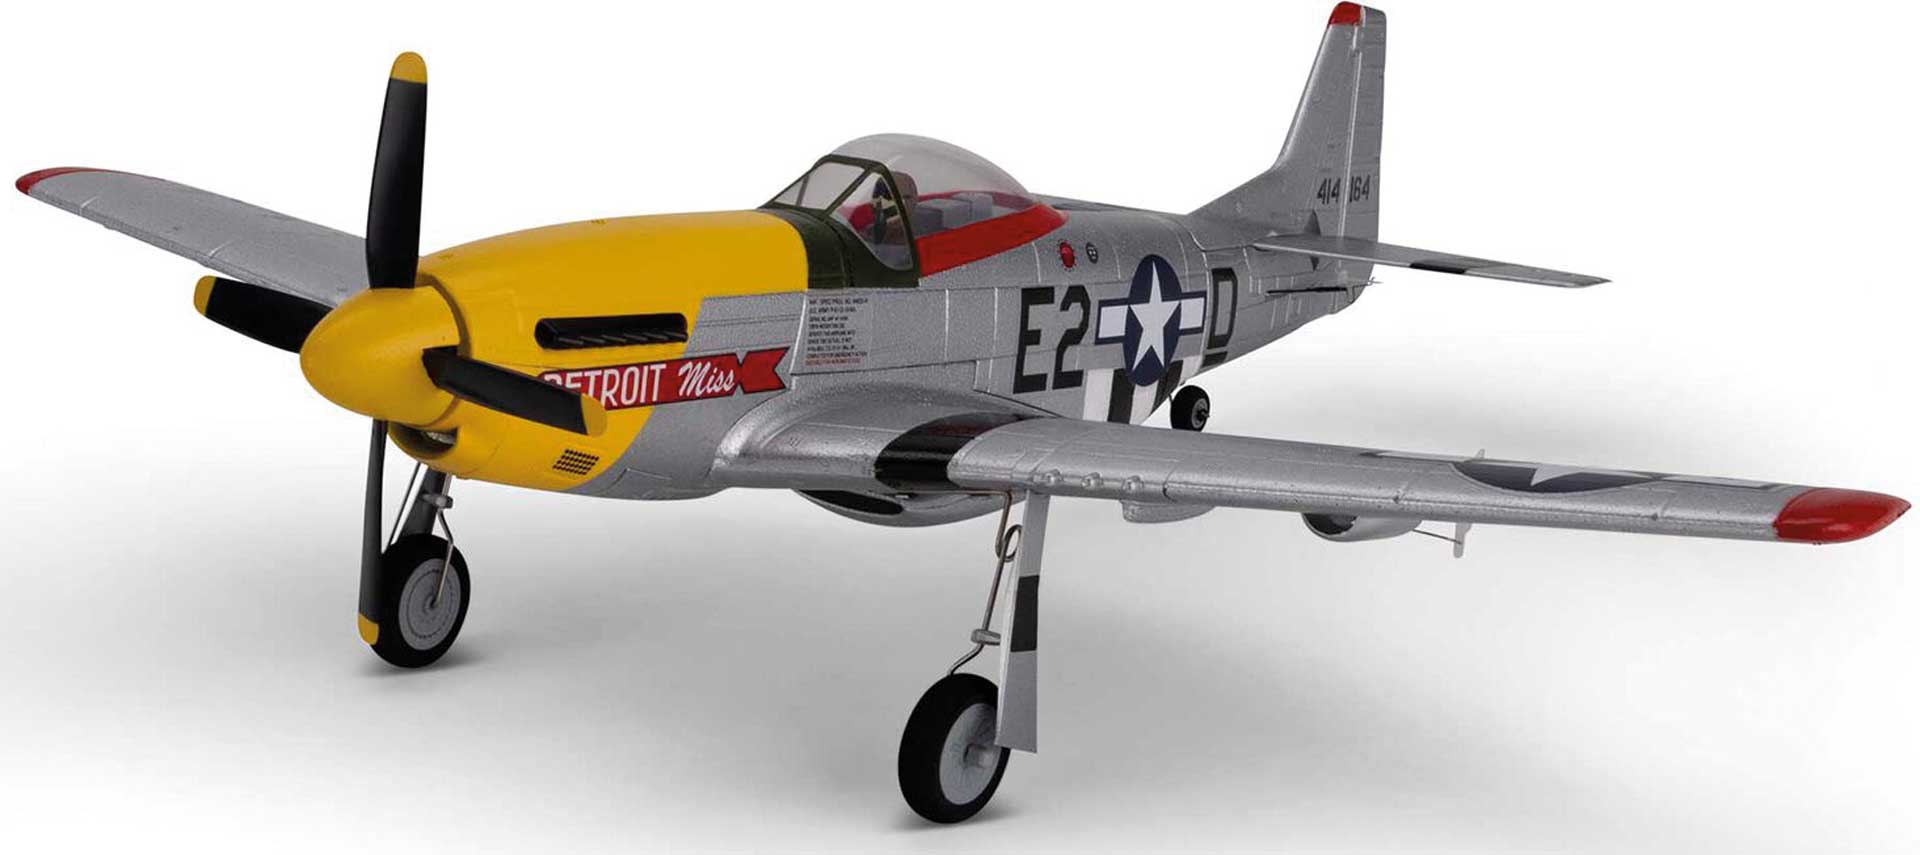 E-FLITE UMX P-51D Mustang "Detroit Miss" BNF Basic avec AS3X et SAFE Select